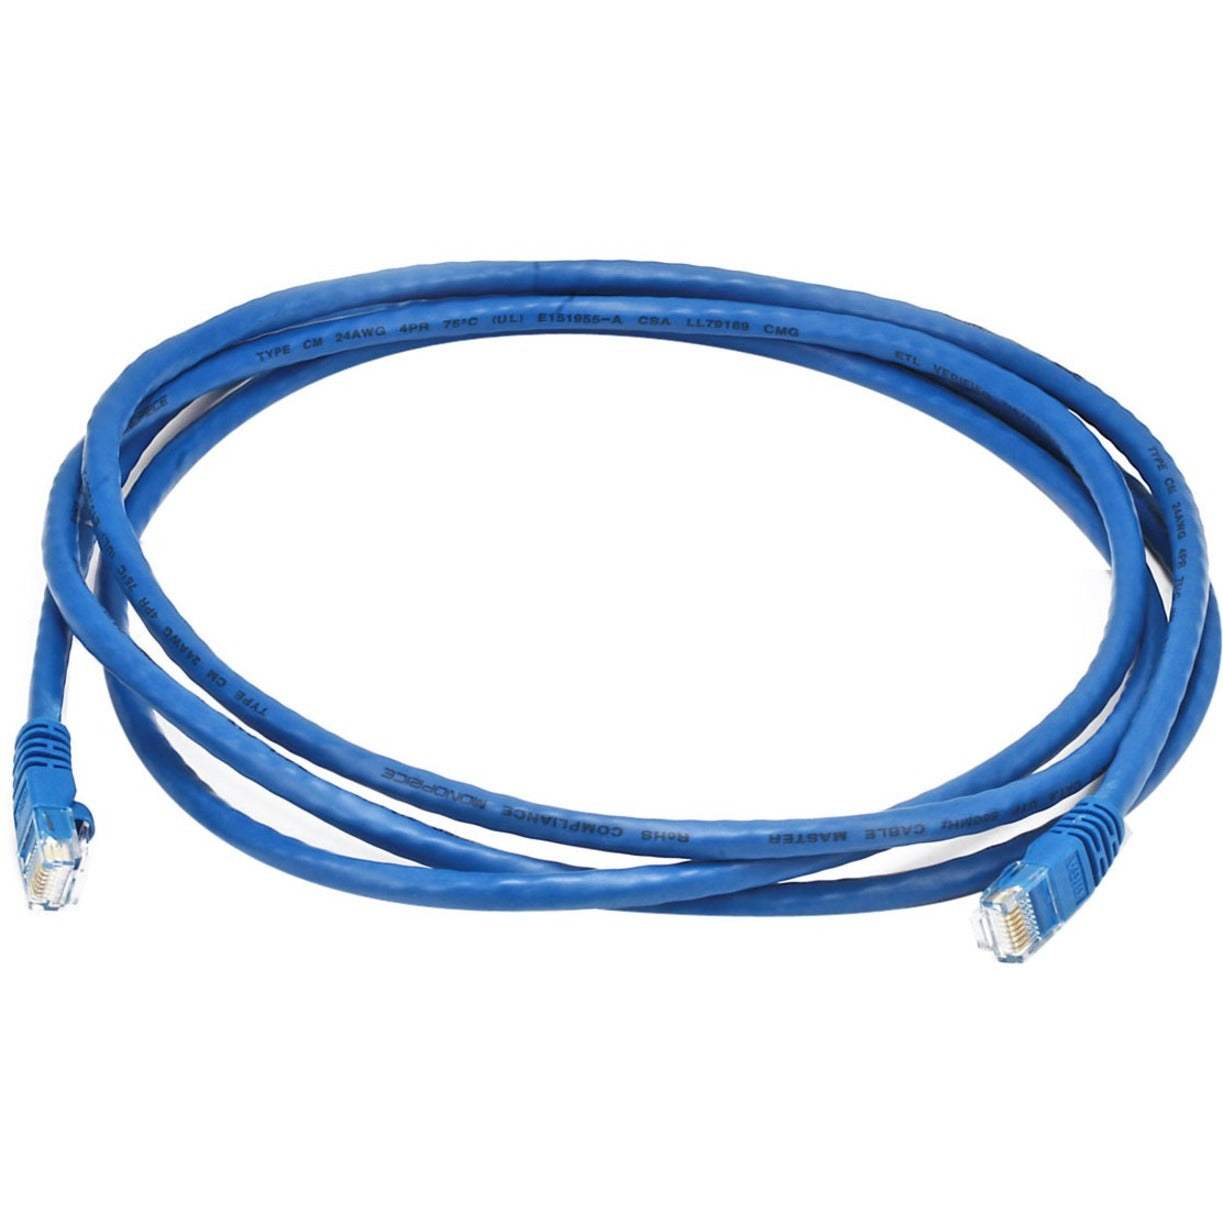 Monoprice 2115 Cat6 24AWG UTP 以太网网络补丁线，7英尺 蓝色 Monoprice 莫诺普莱斯